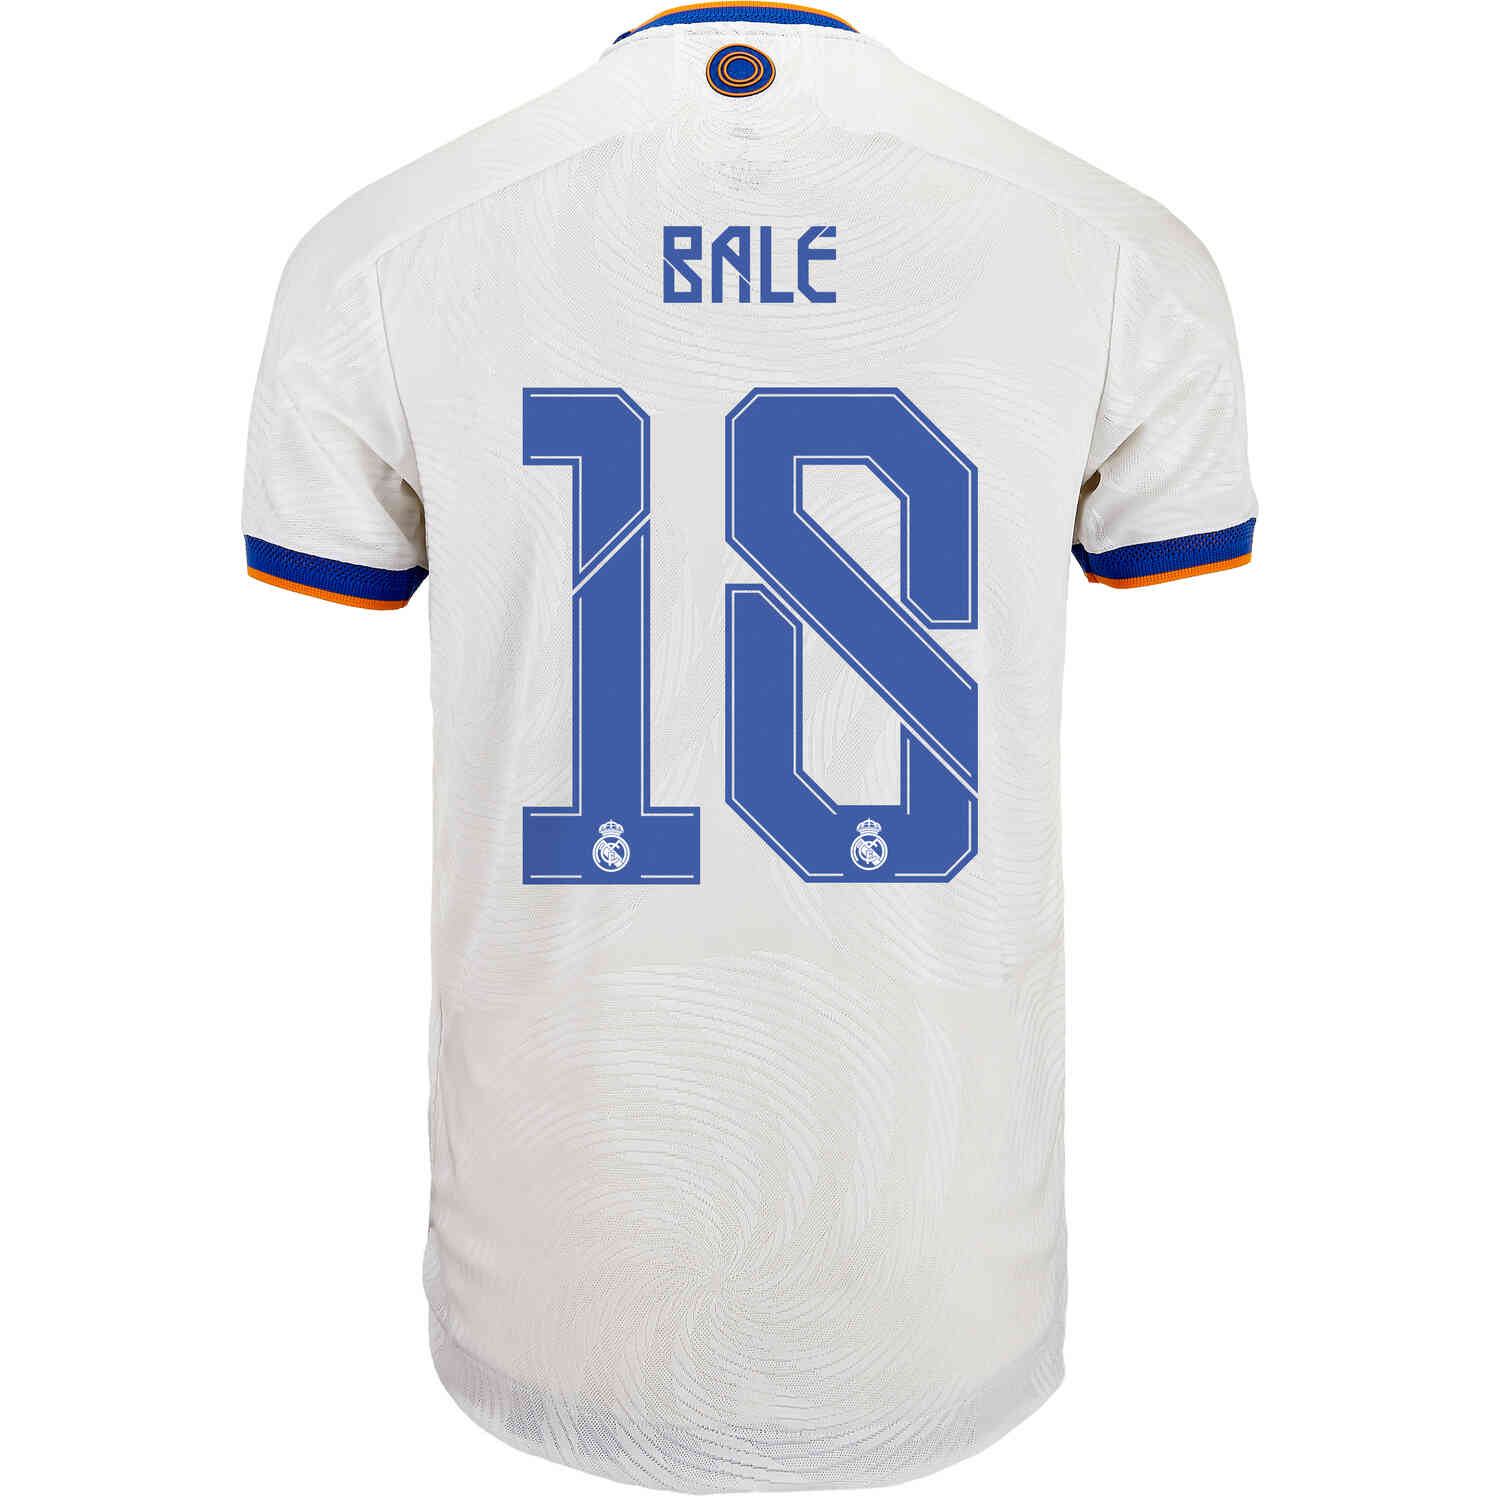 Gareth Bale  Football Shirts, Jerseys & Kits